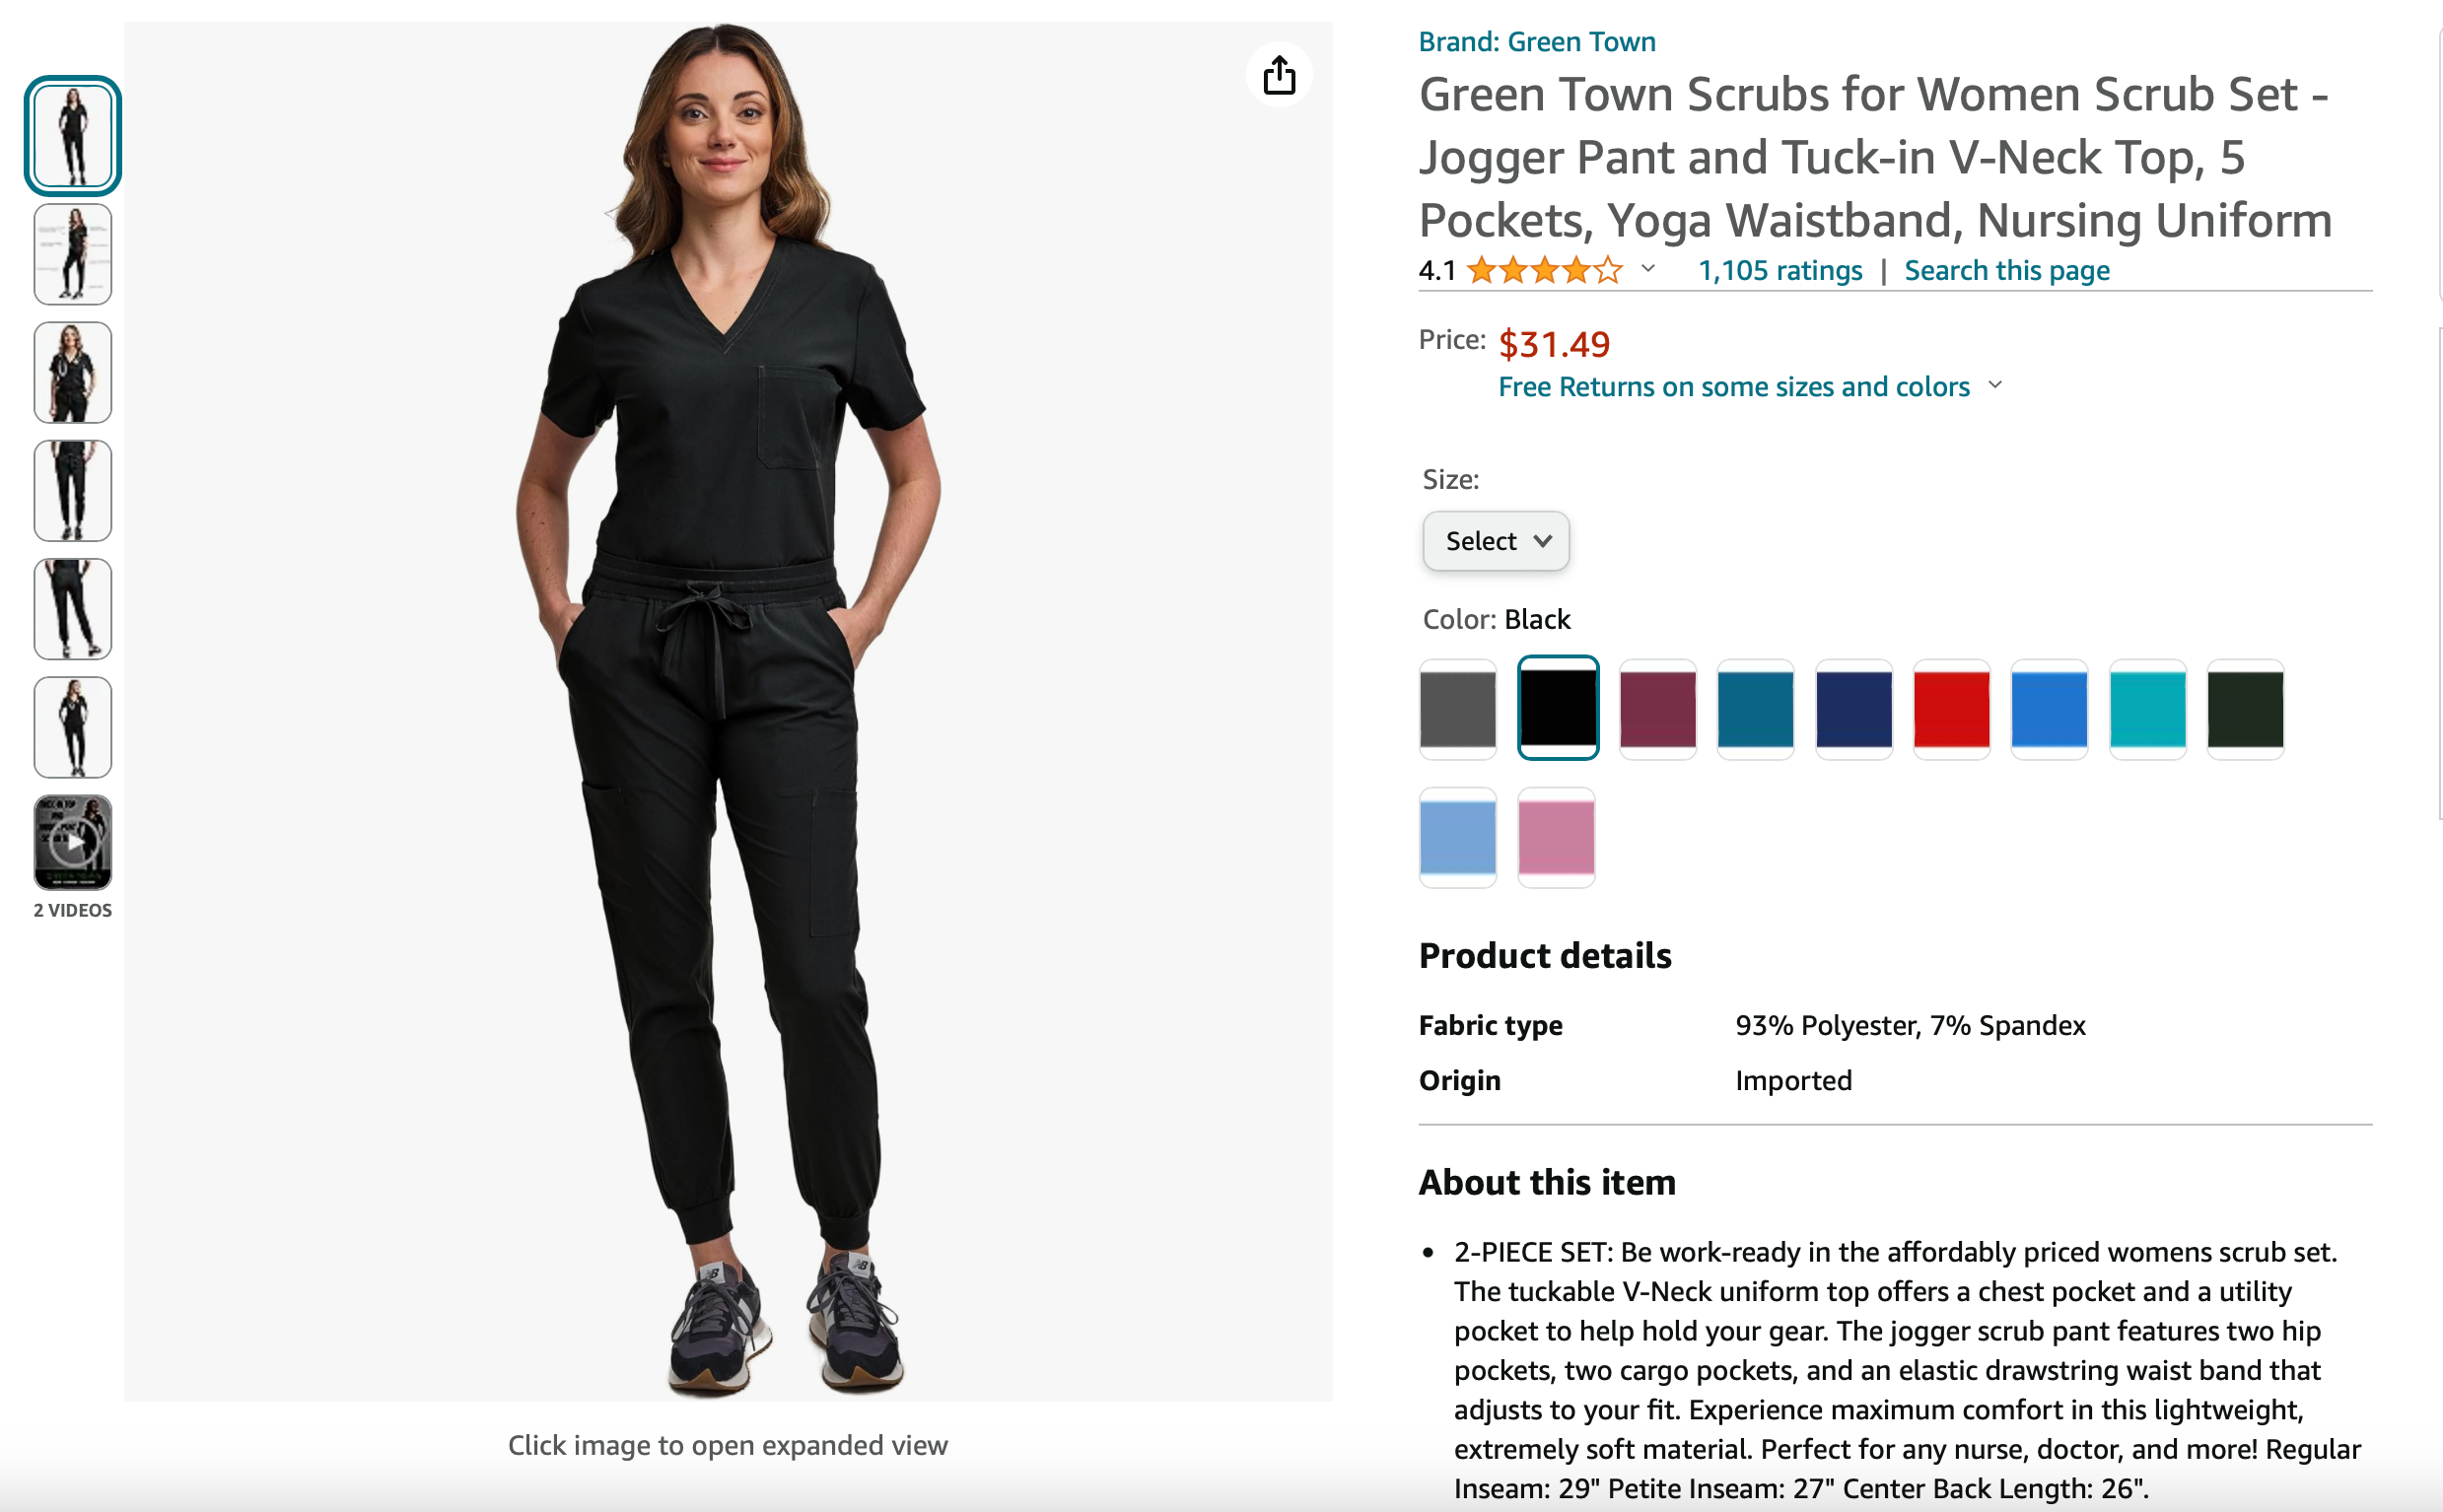 Green Town Scrubs for Women Scrub Set - Jogger Pant and Tuck-in V-Neck Top, 5 Pockets, Yoga Waistband, Nursing Uniform